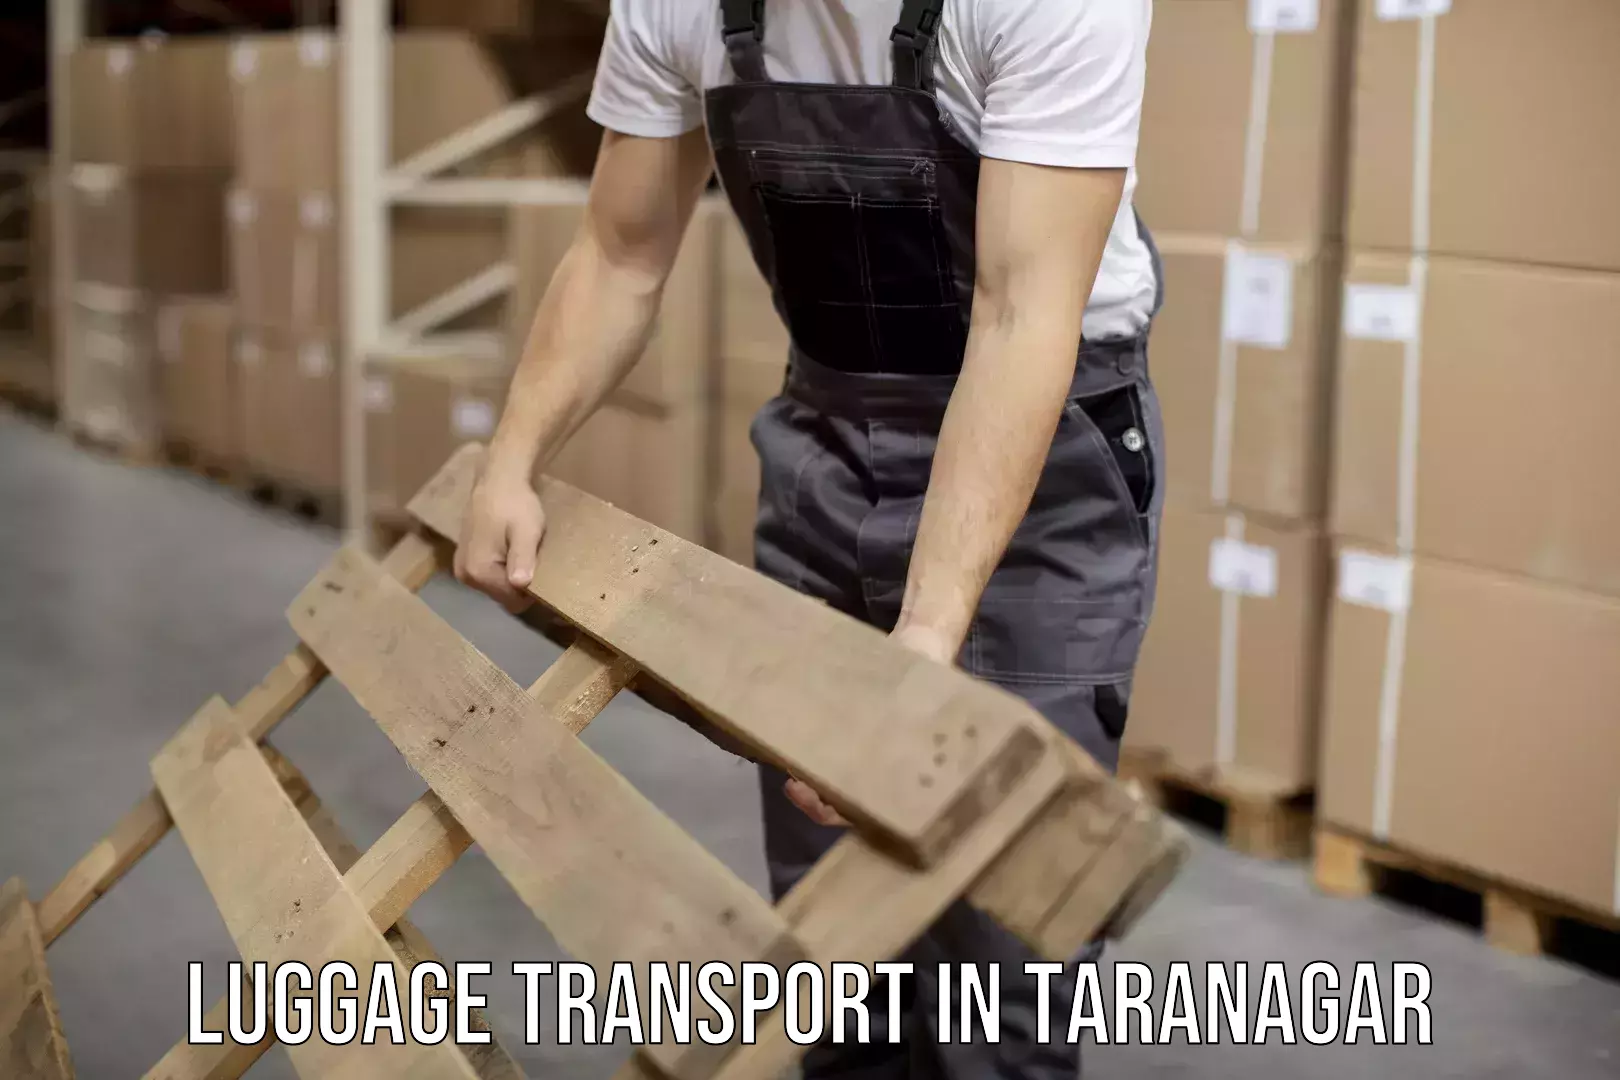 Luggage delivery providers in Taranagar